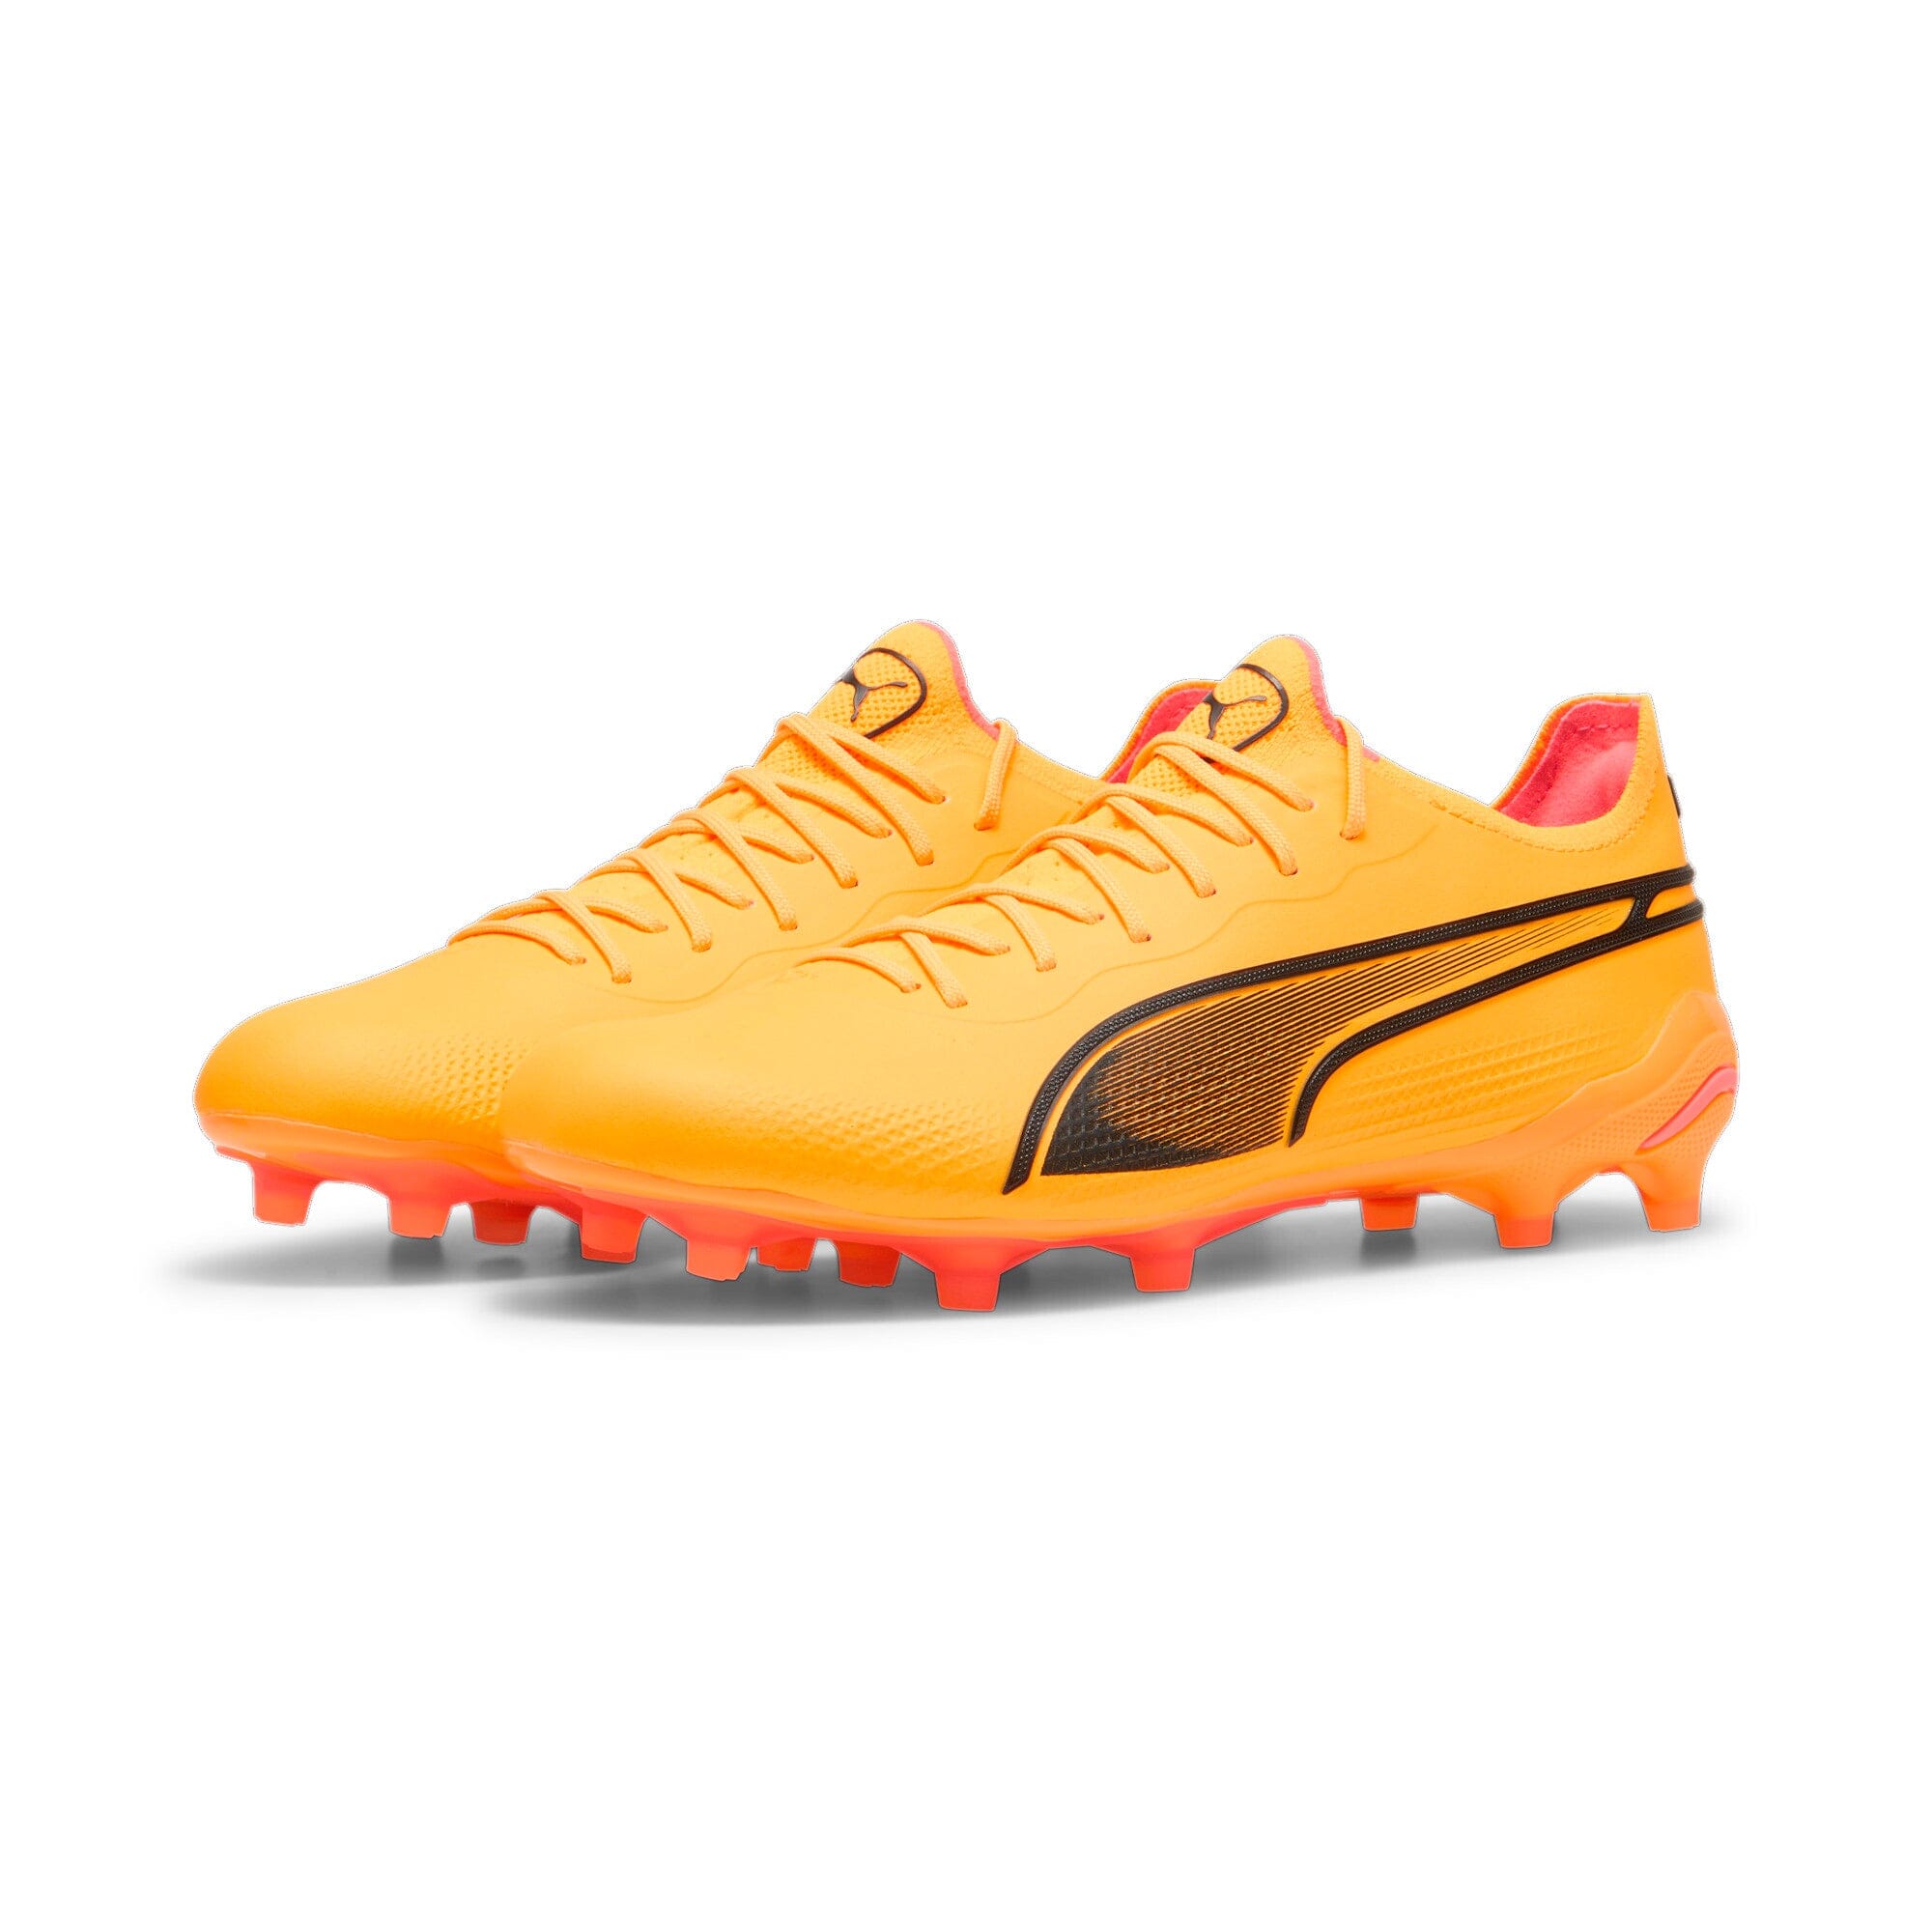 Puma Men's King Ultimate FG/AG Soccer Shoes | 10756308 Cleats Puma 